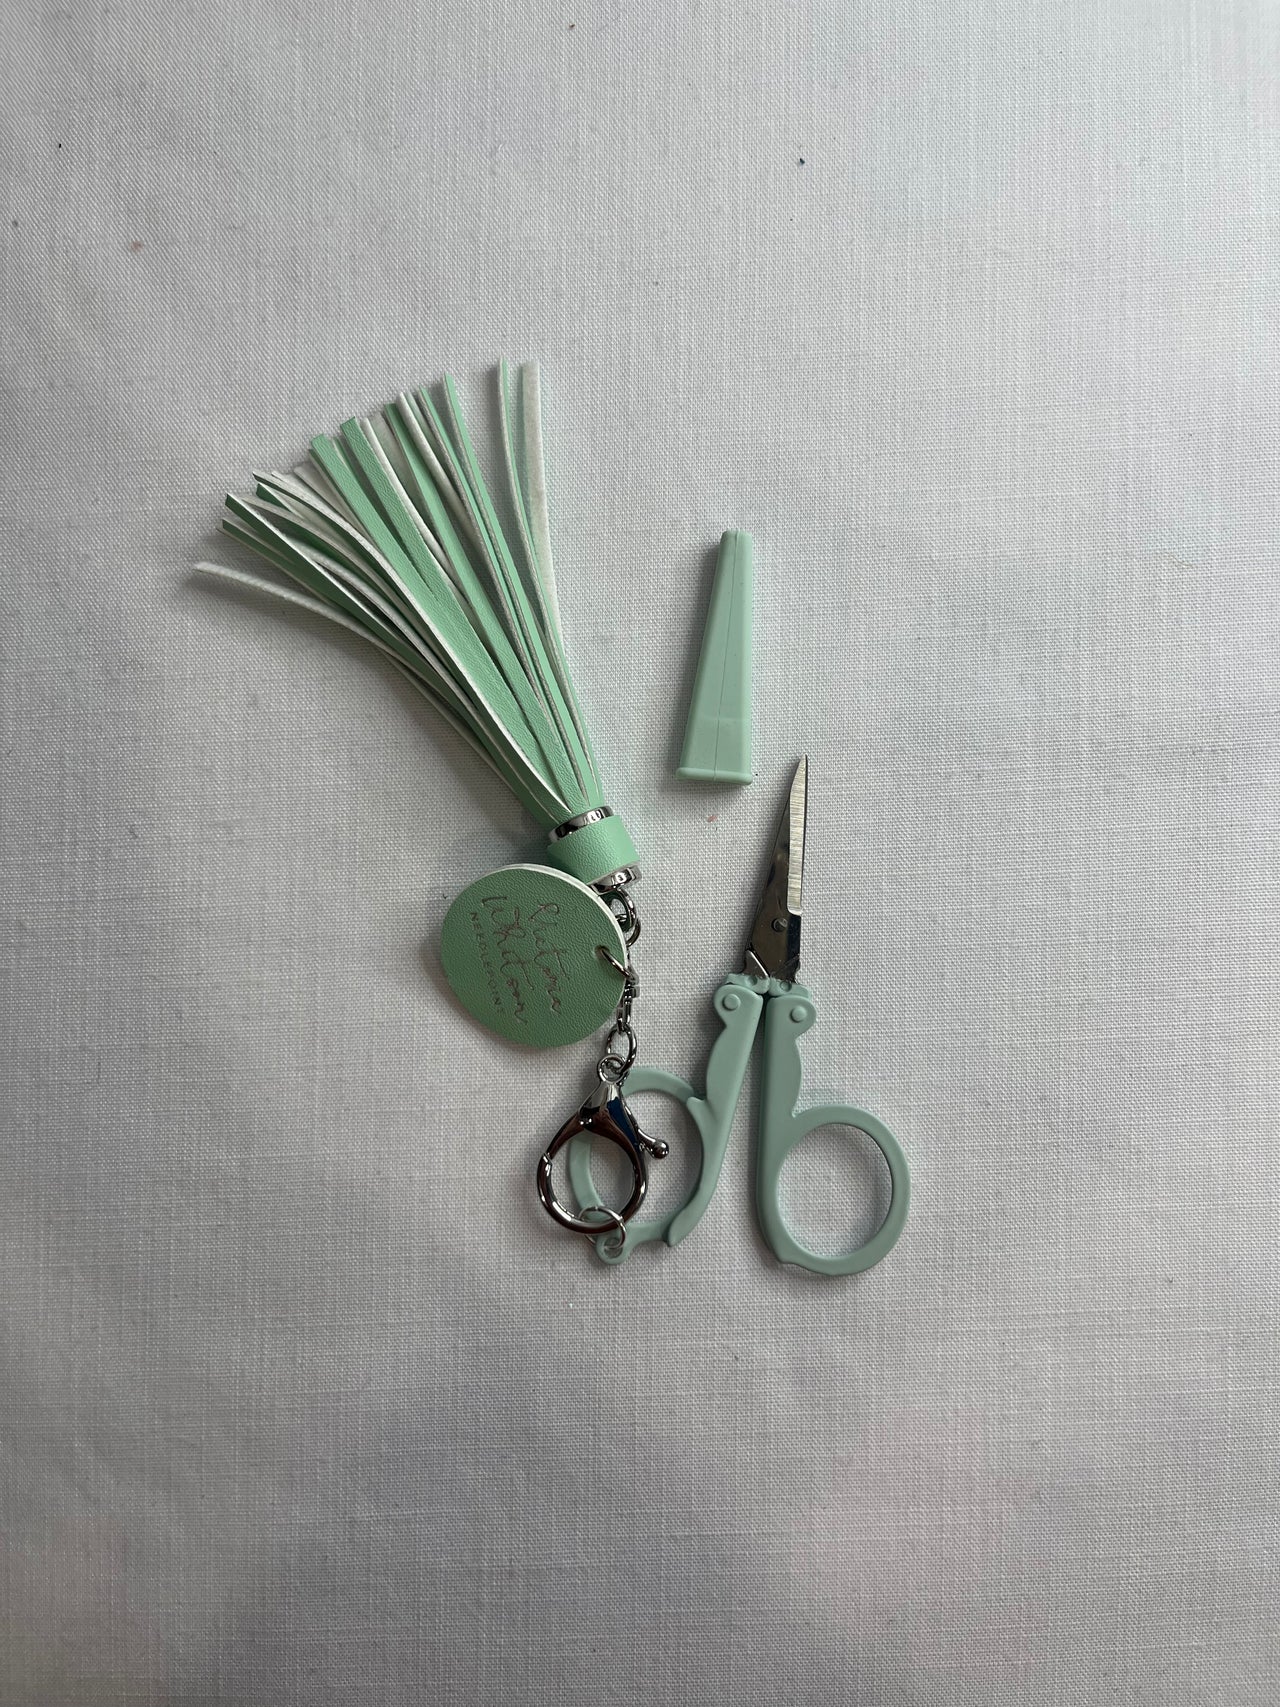 The Knitting Barber Mini Embroidery Scissors | Pequena tesoura de bordar